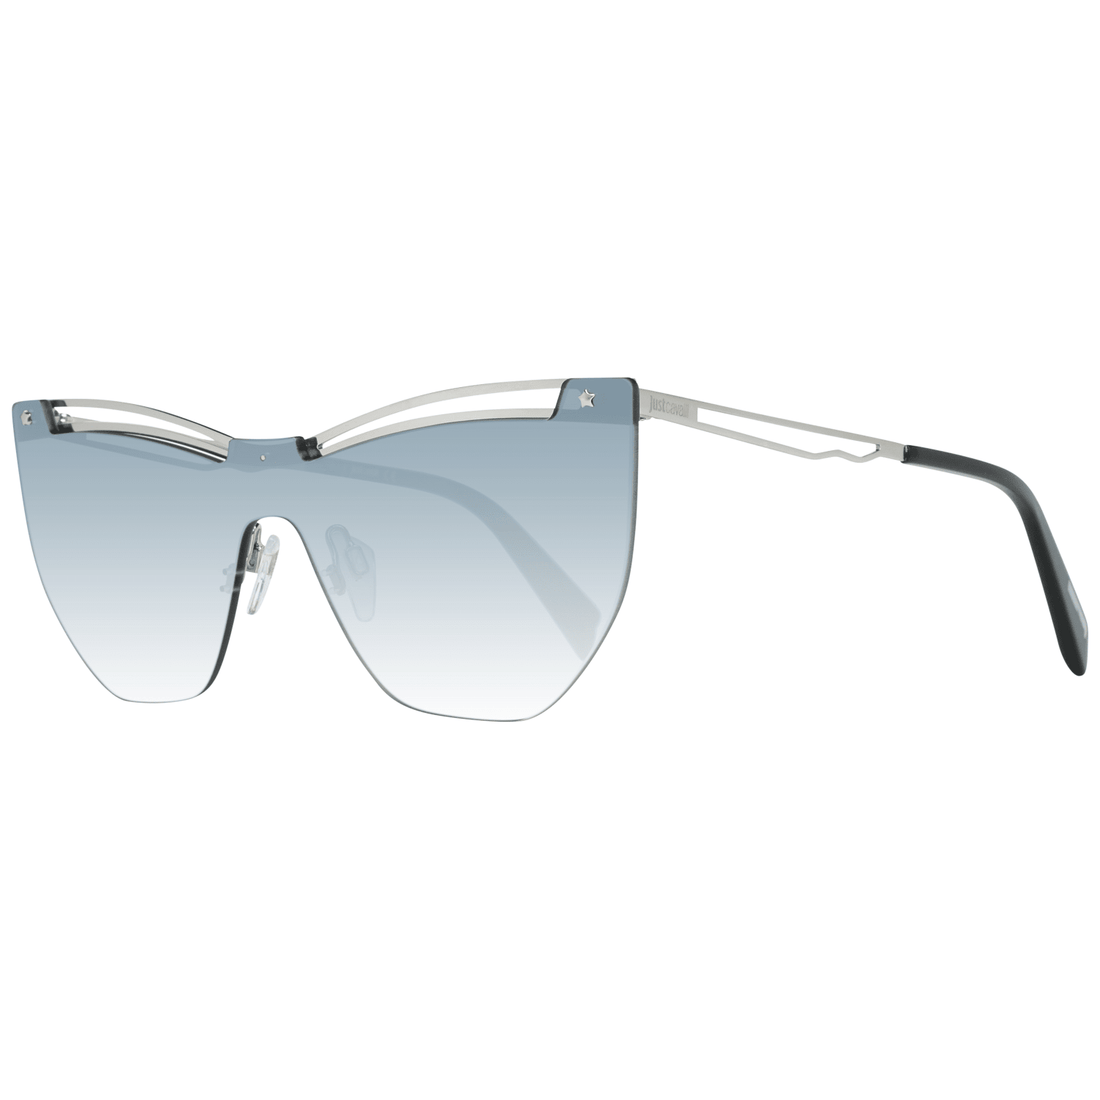 Just Cavalli Silver Women Sunglasses